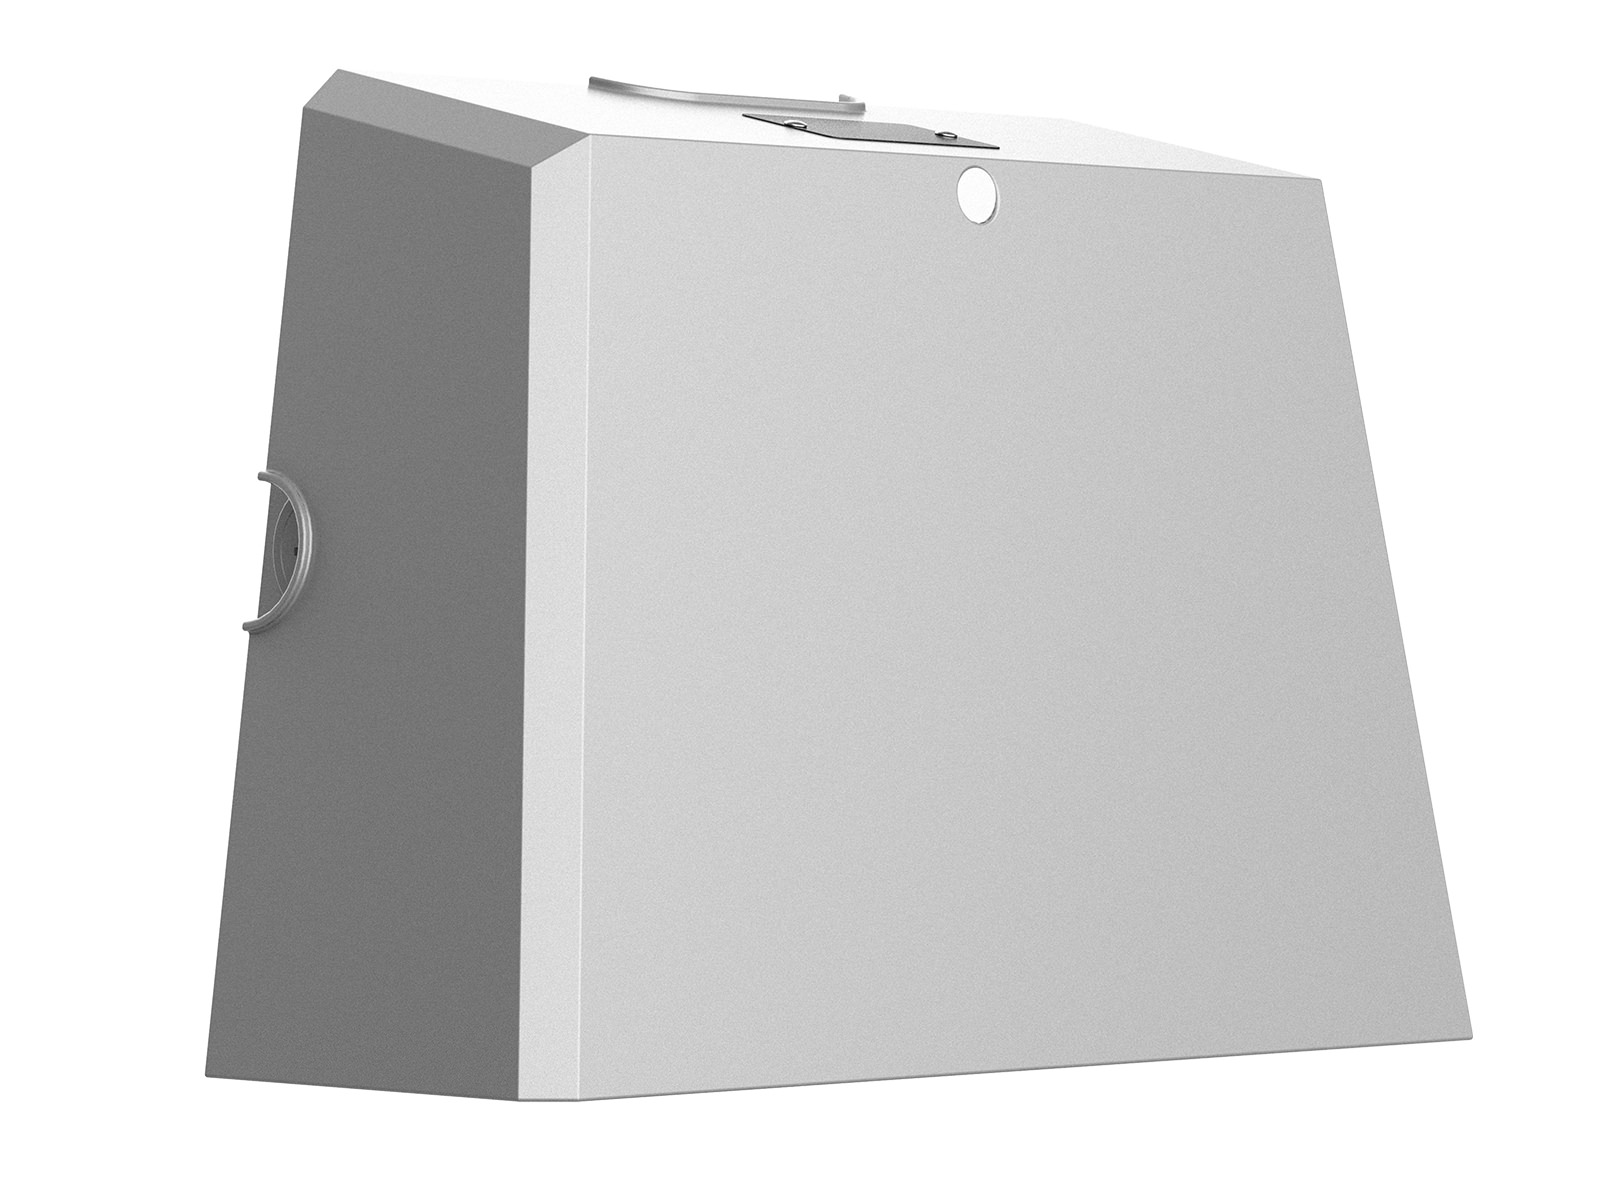 UWP05 Gsite LED Wall Pack Light with motion sensor